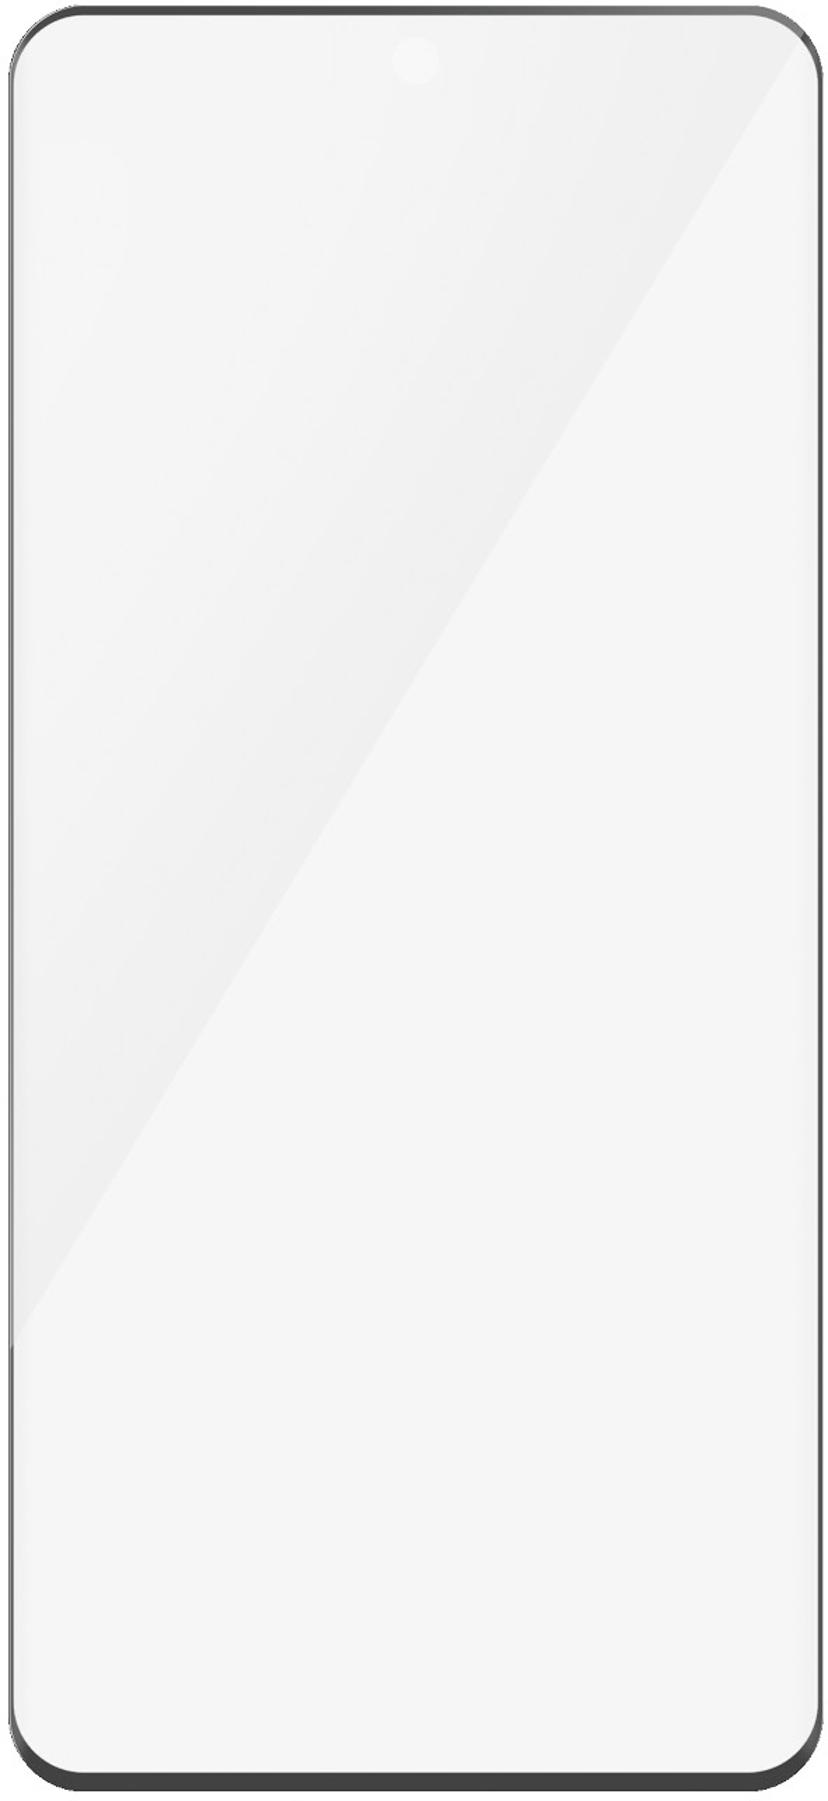 Panzerglass Ultra-Wide Fit OnePlus 12